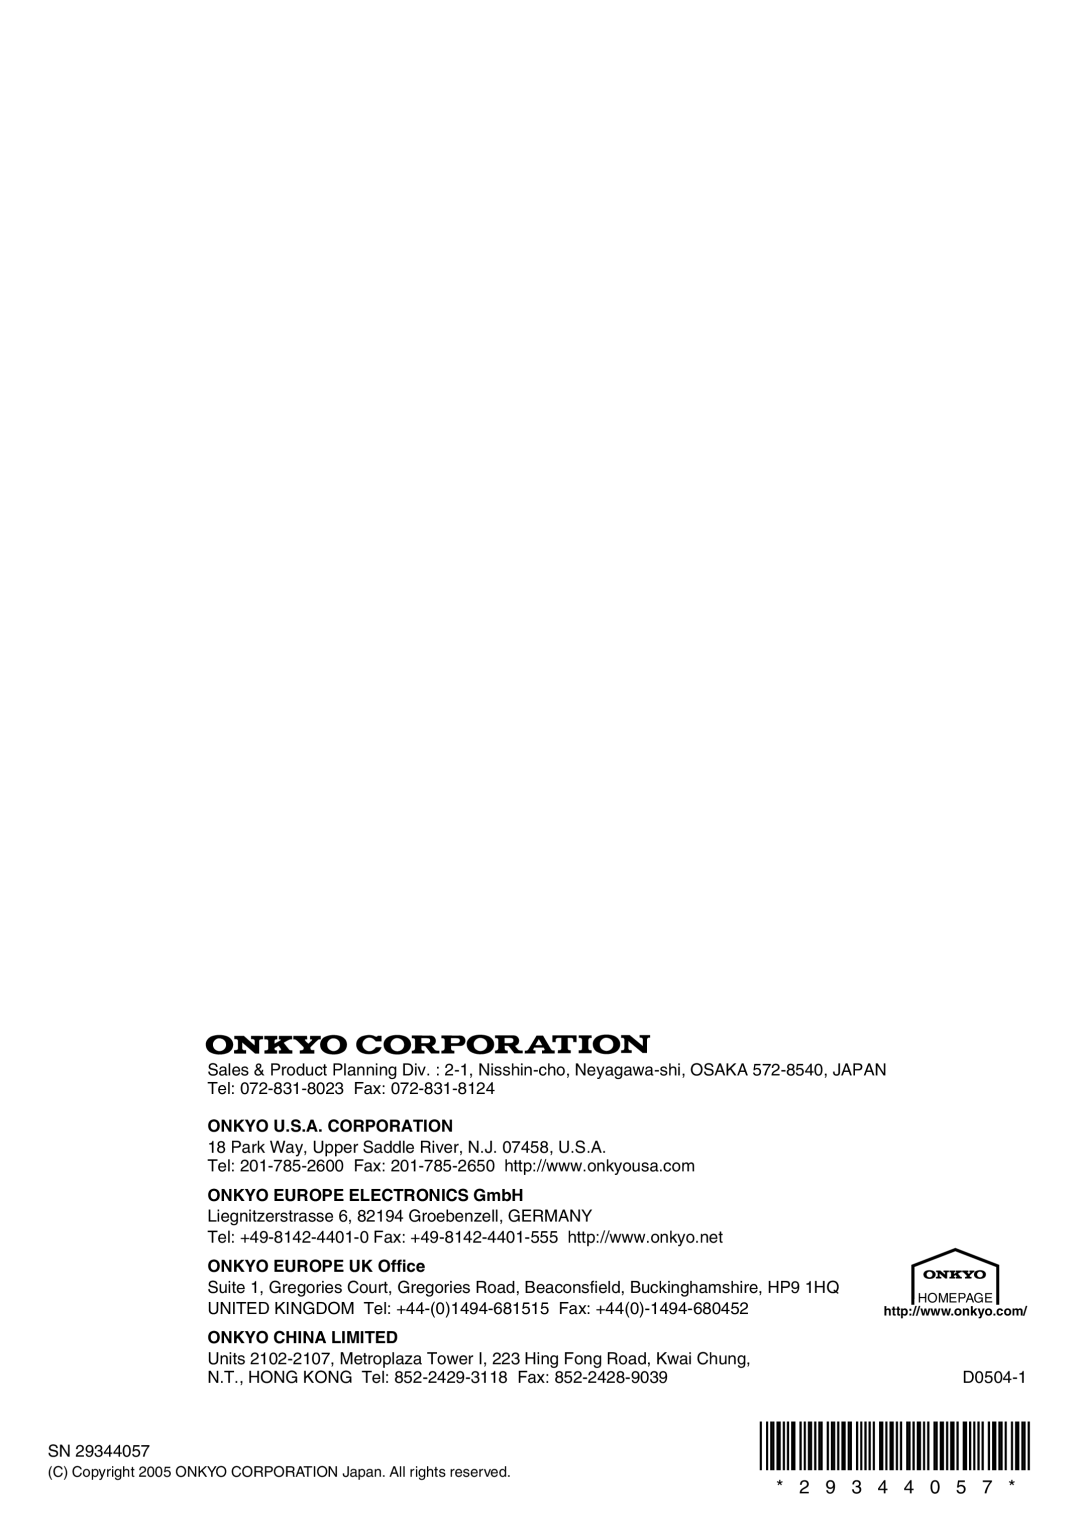 Onkyo DV-SP503E 2 9 3 4 4 0 5, Onkyo U.S.A. Corporation, ONKYO EUROPE ELECTRONICS GmbH, ONKYO EUROPE UK Office 